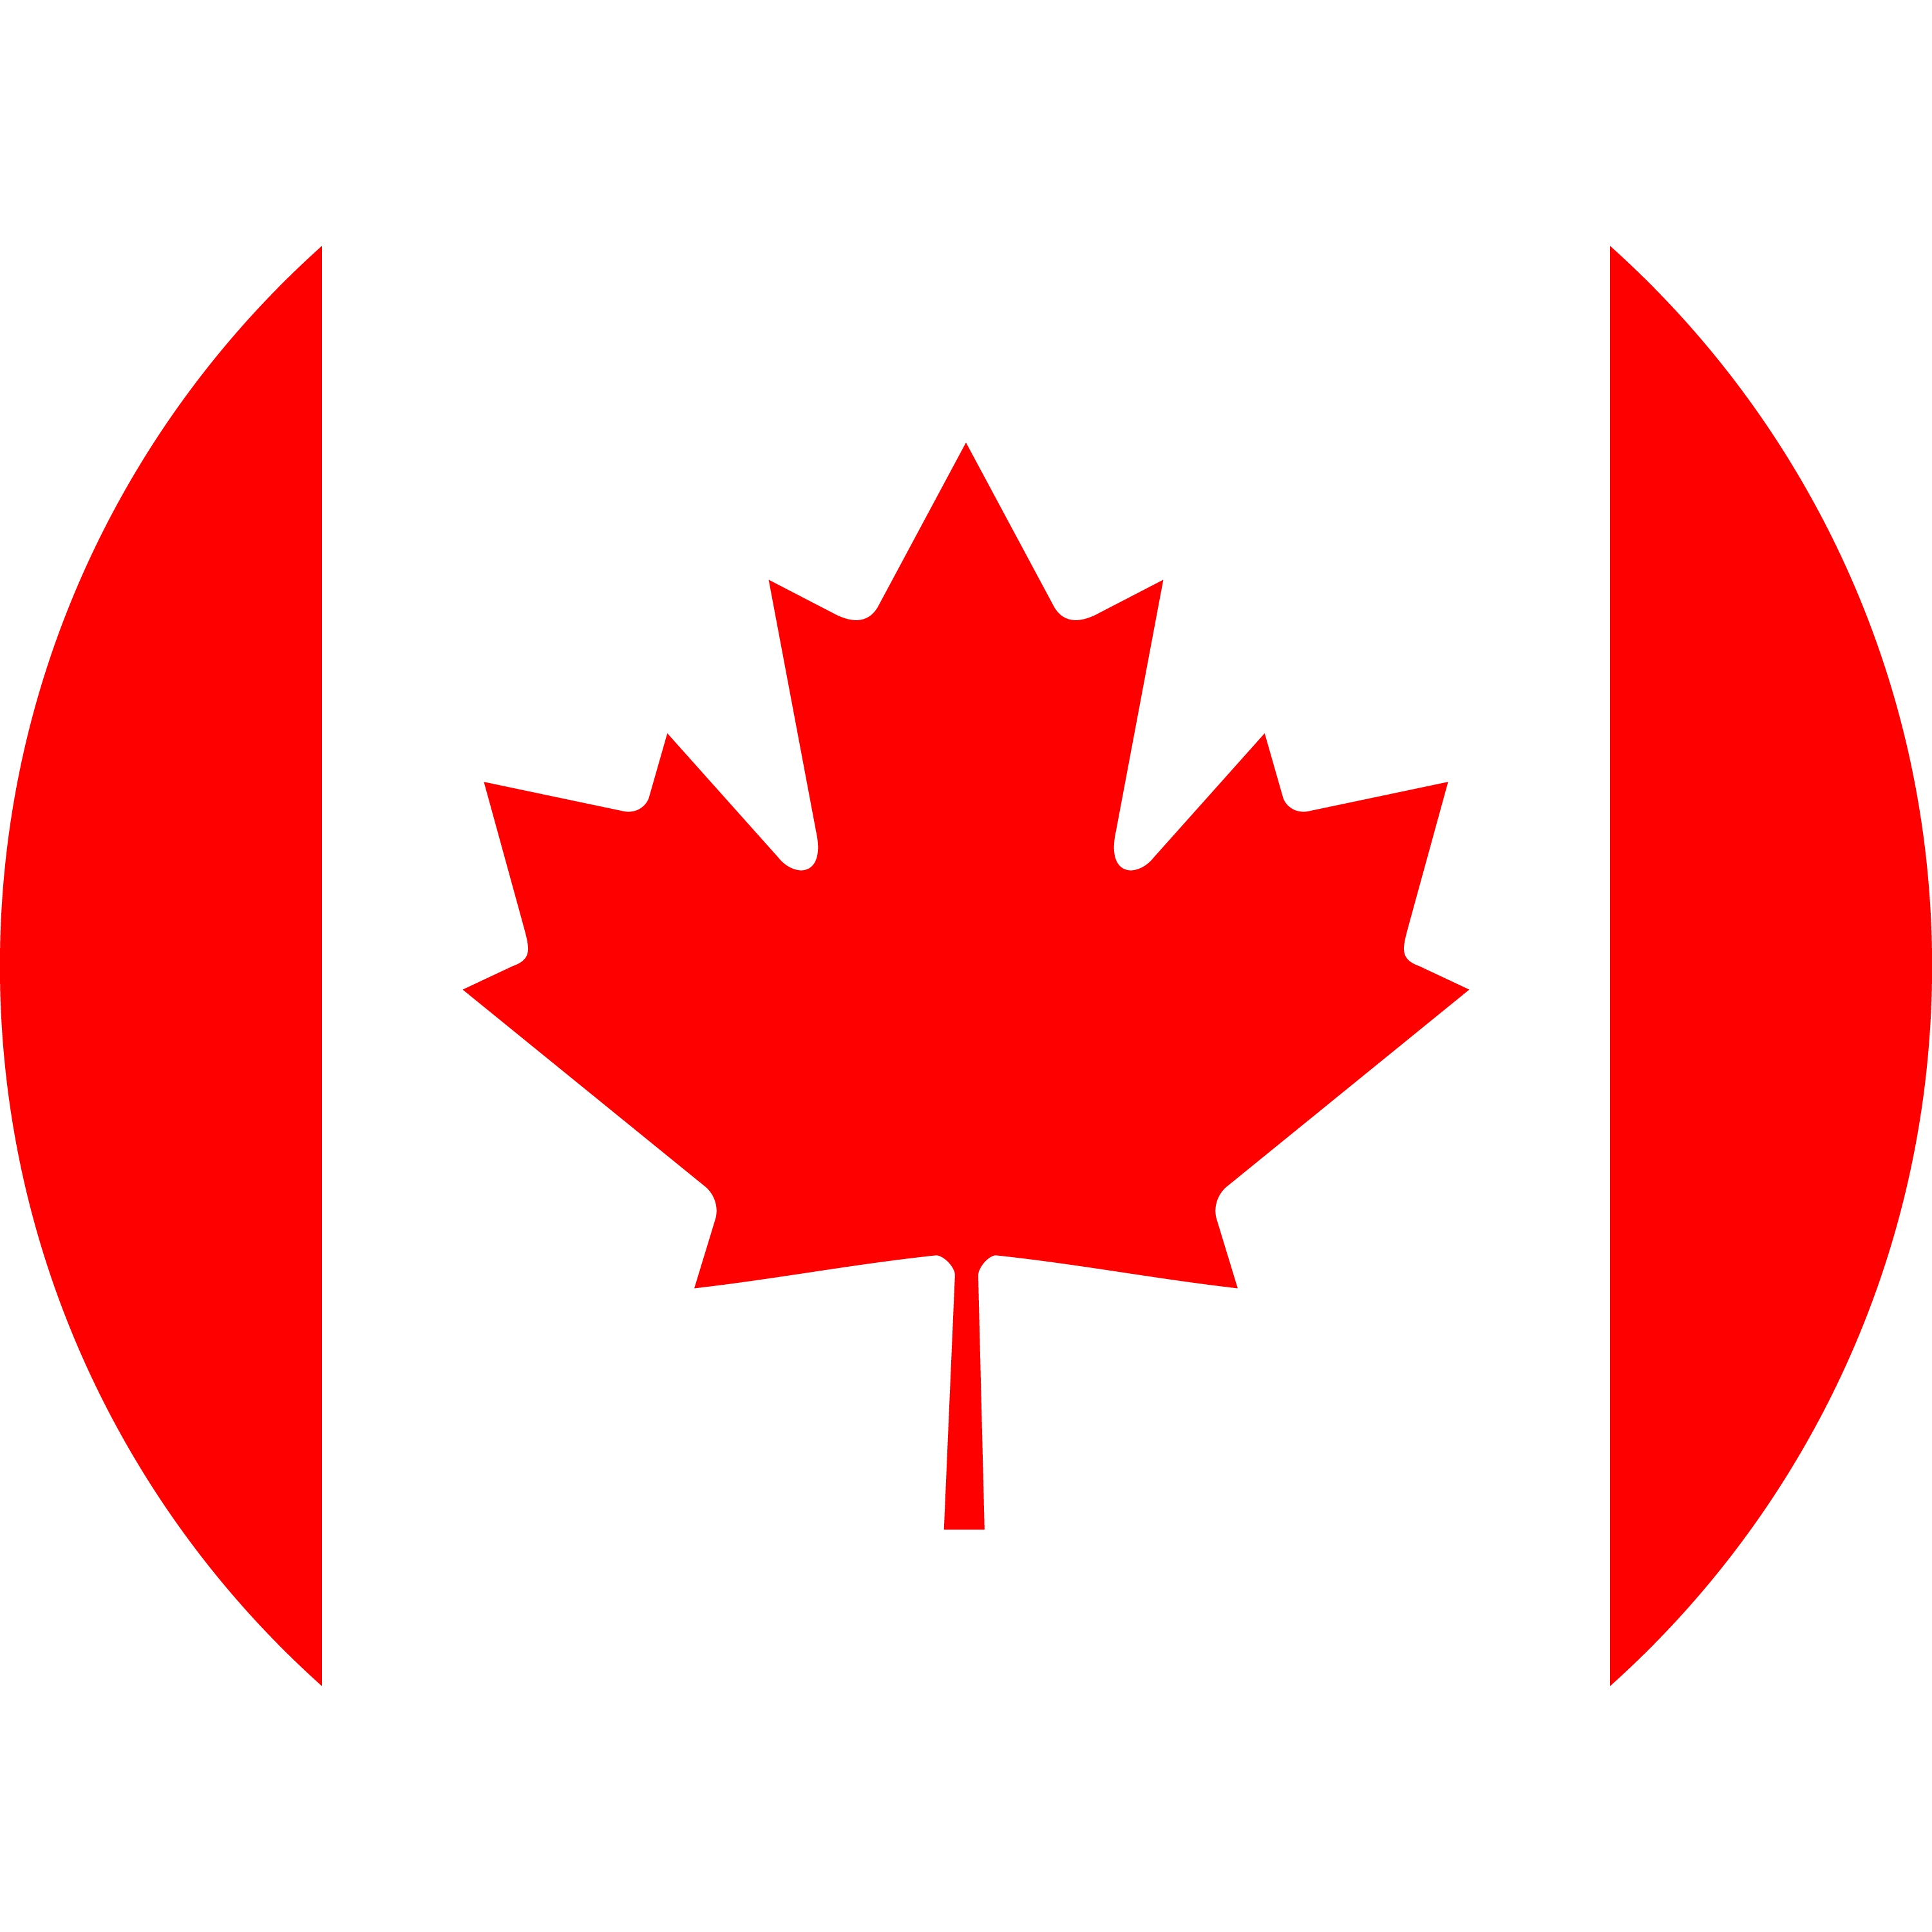 SOMIRA Canada Group